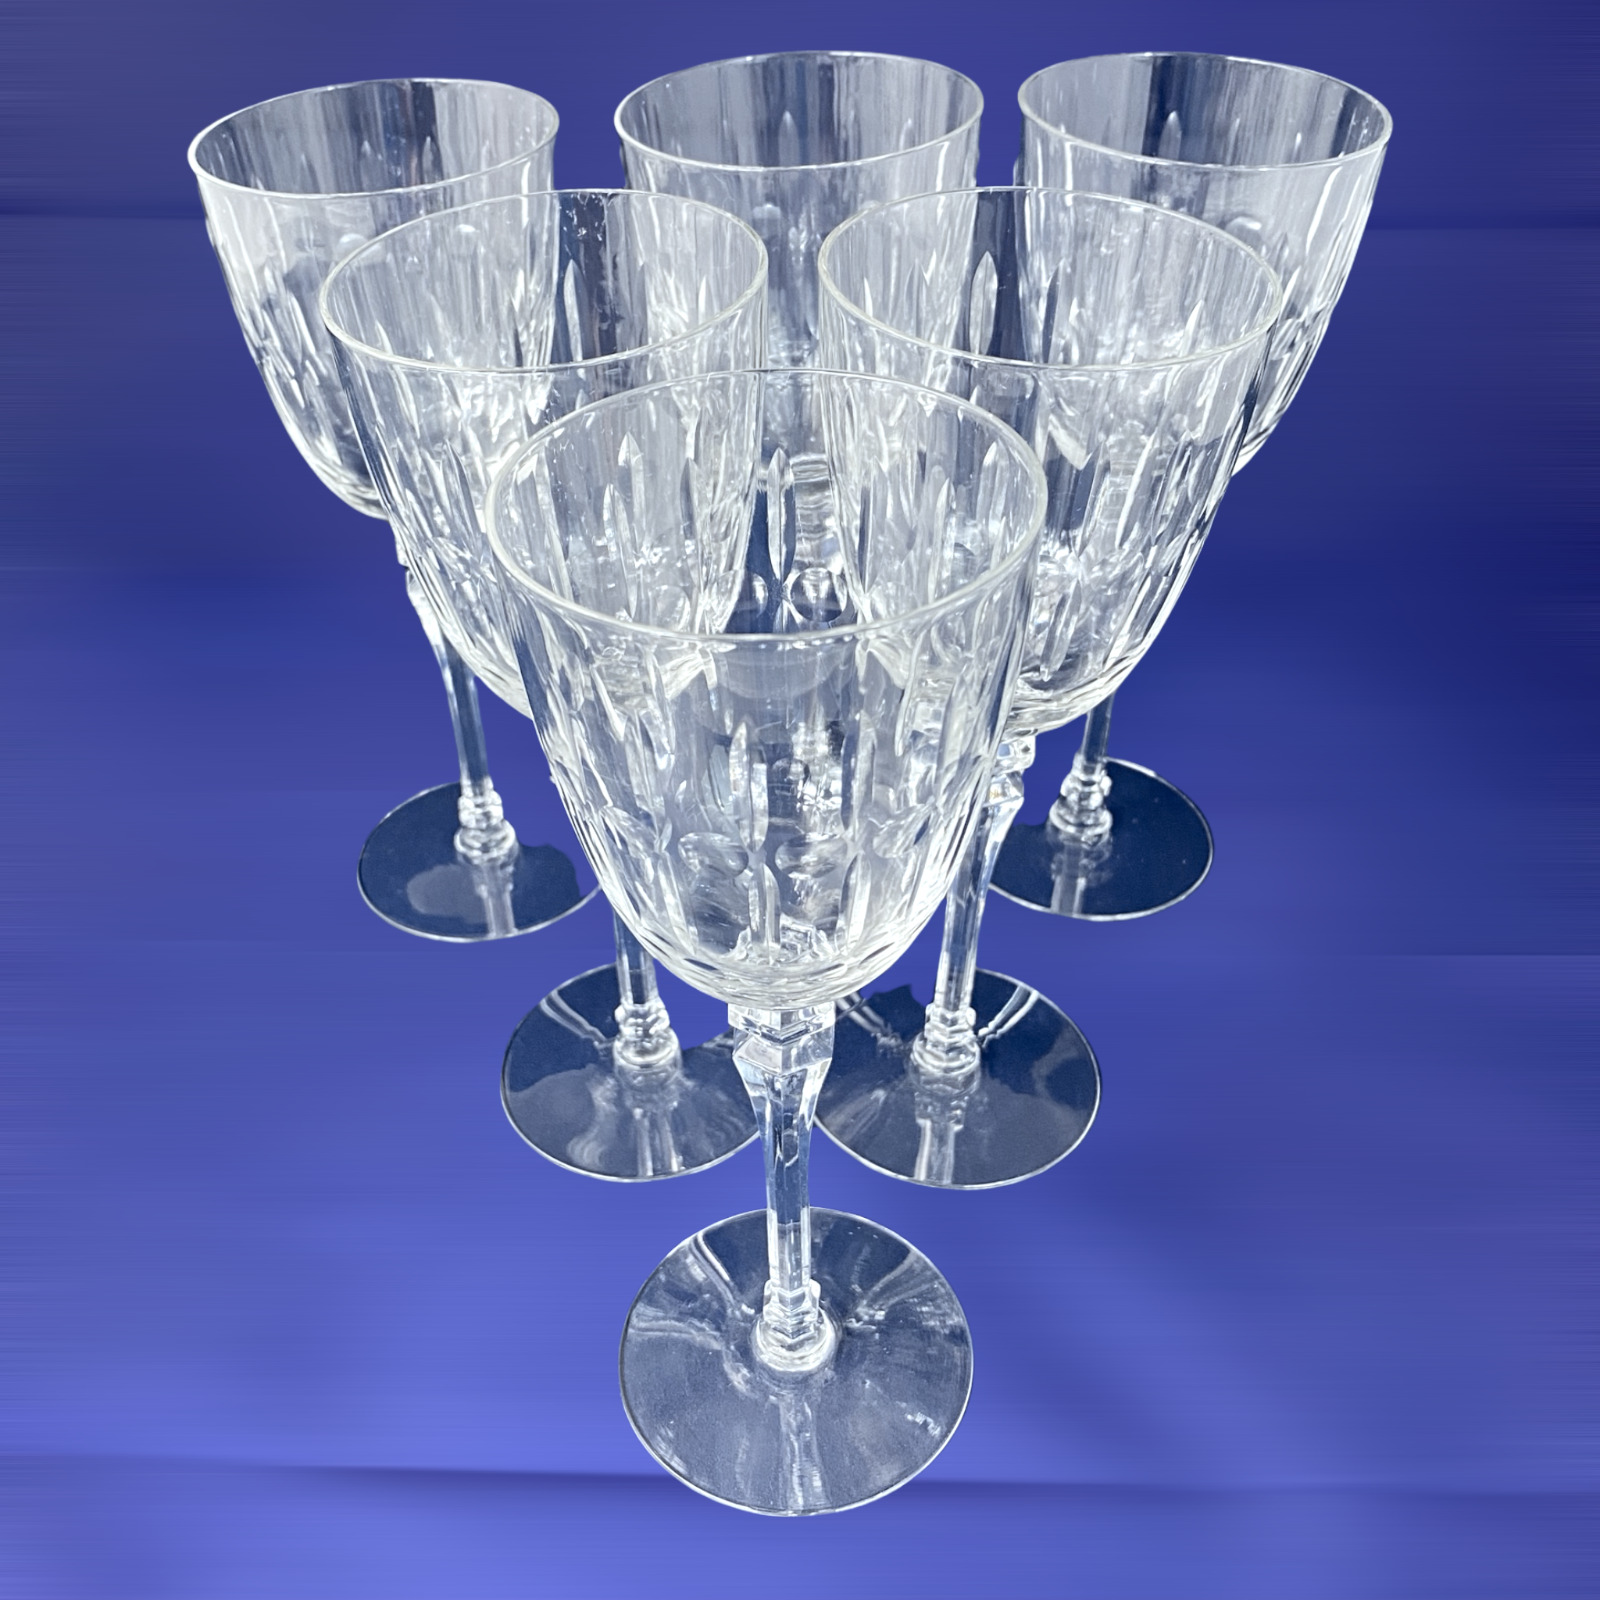 Vintage Antique Late Victorian Stemware Wine Glasses - Hexagonal Stem – Set of 6